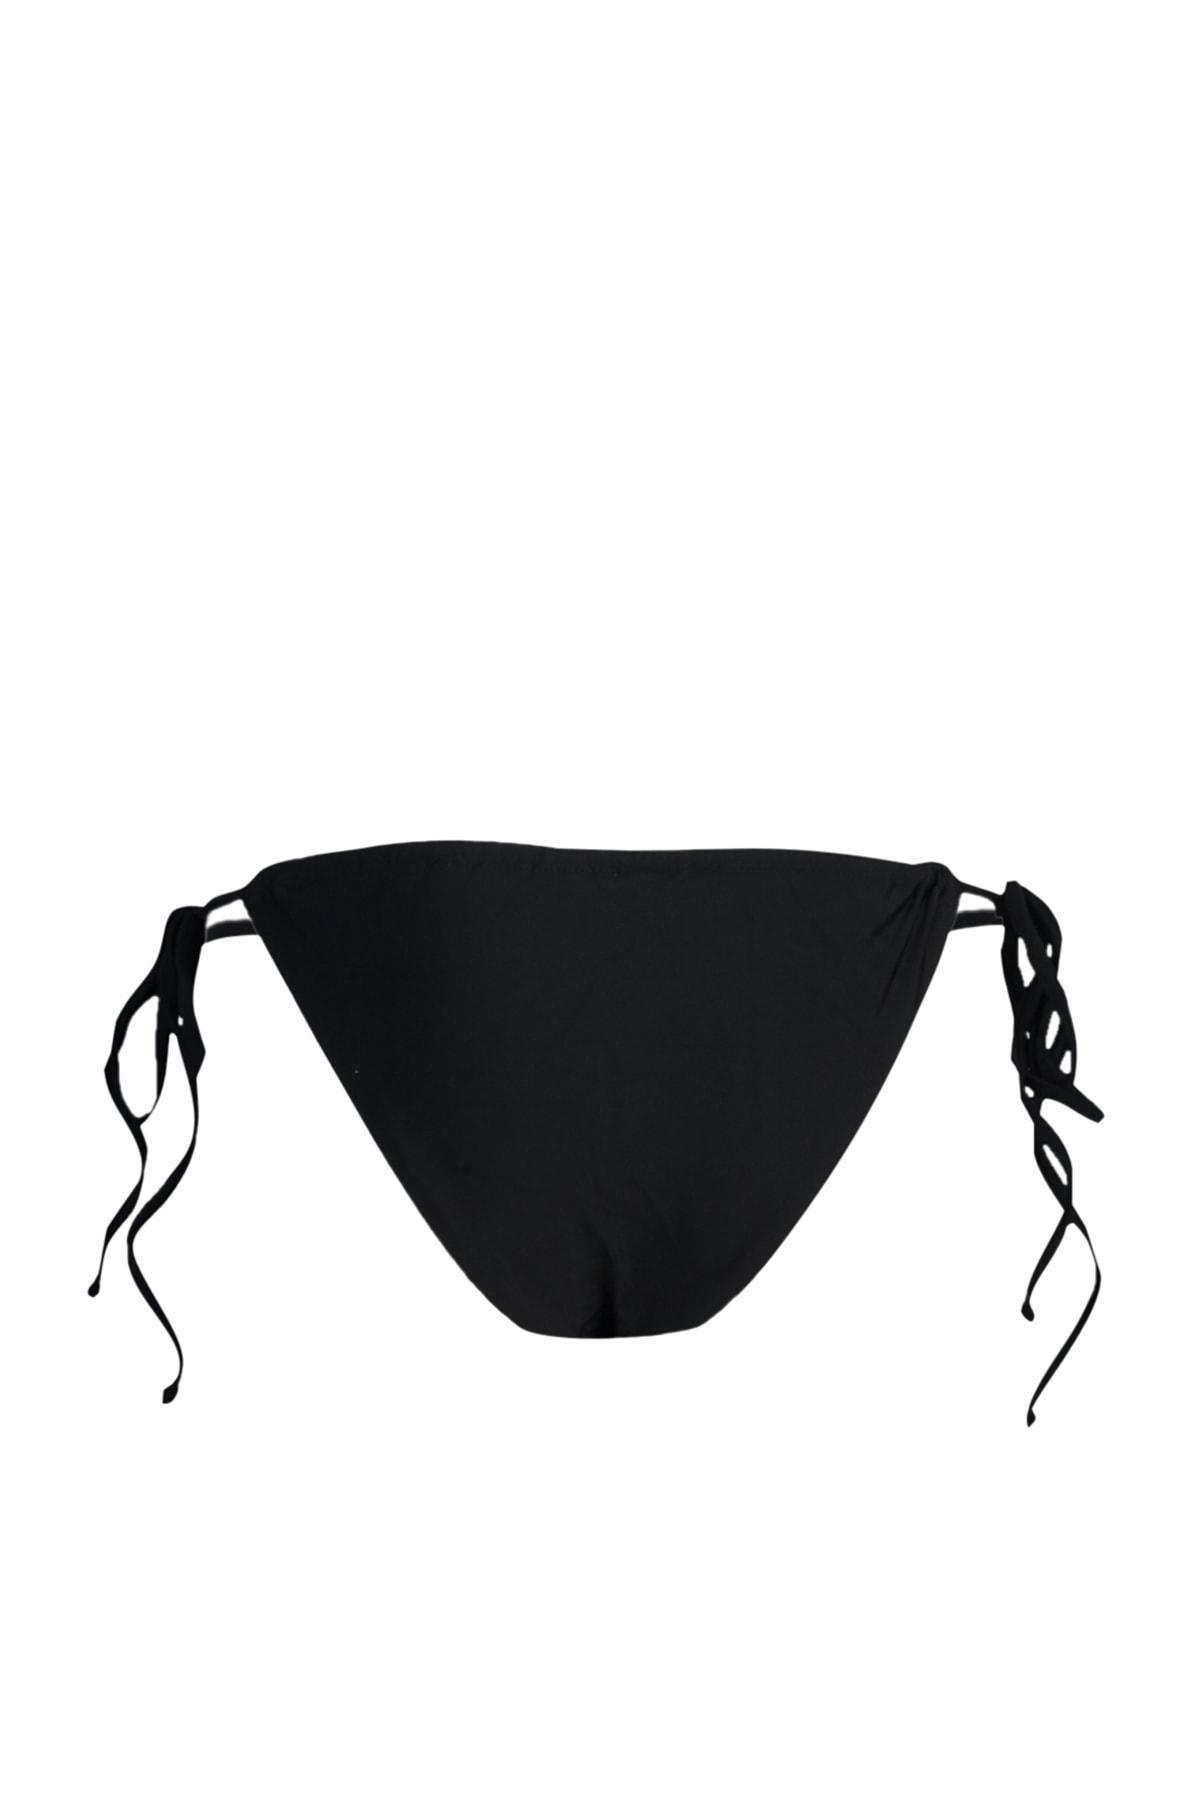 Trendyol - Black Plain Bikini Bottom